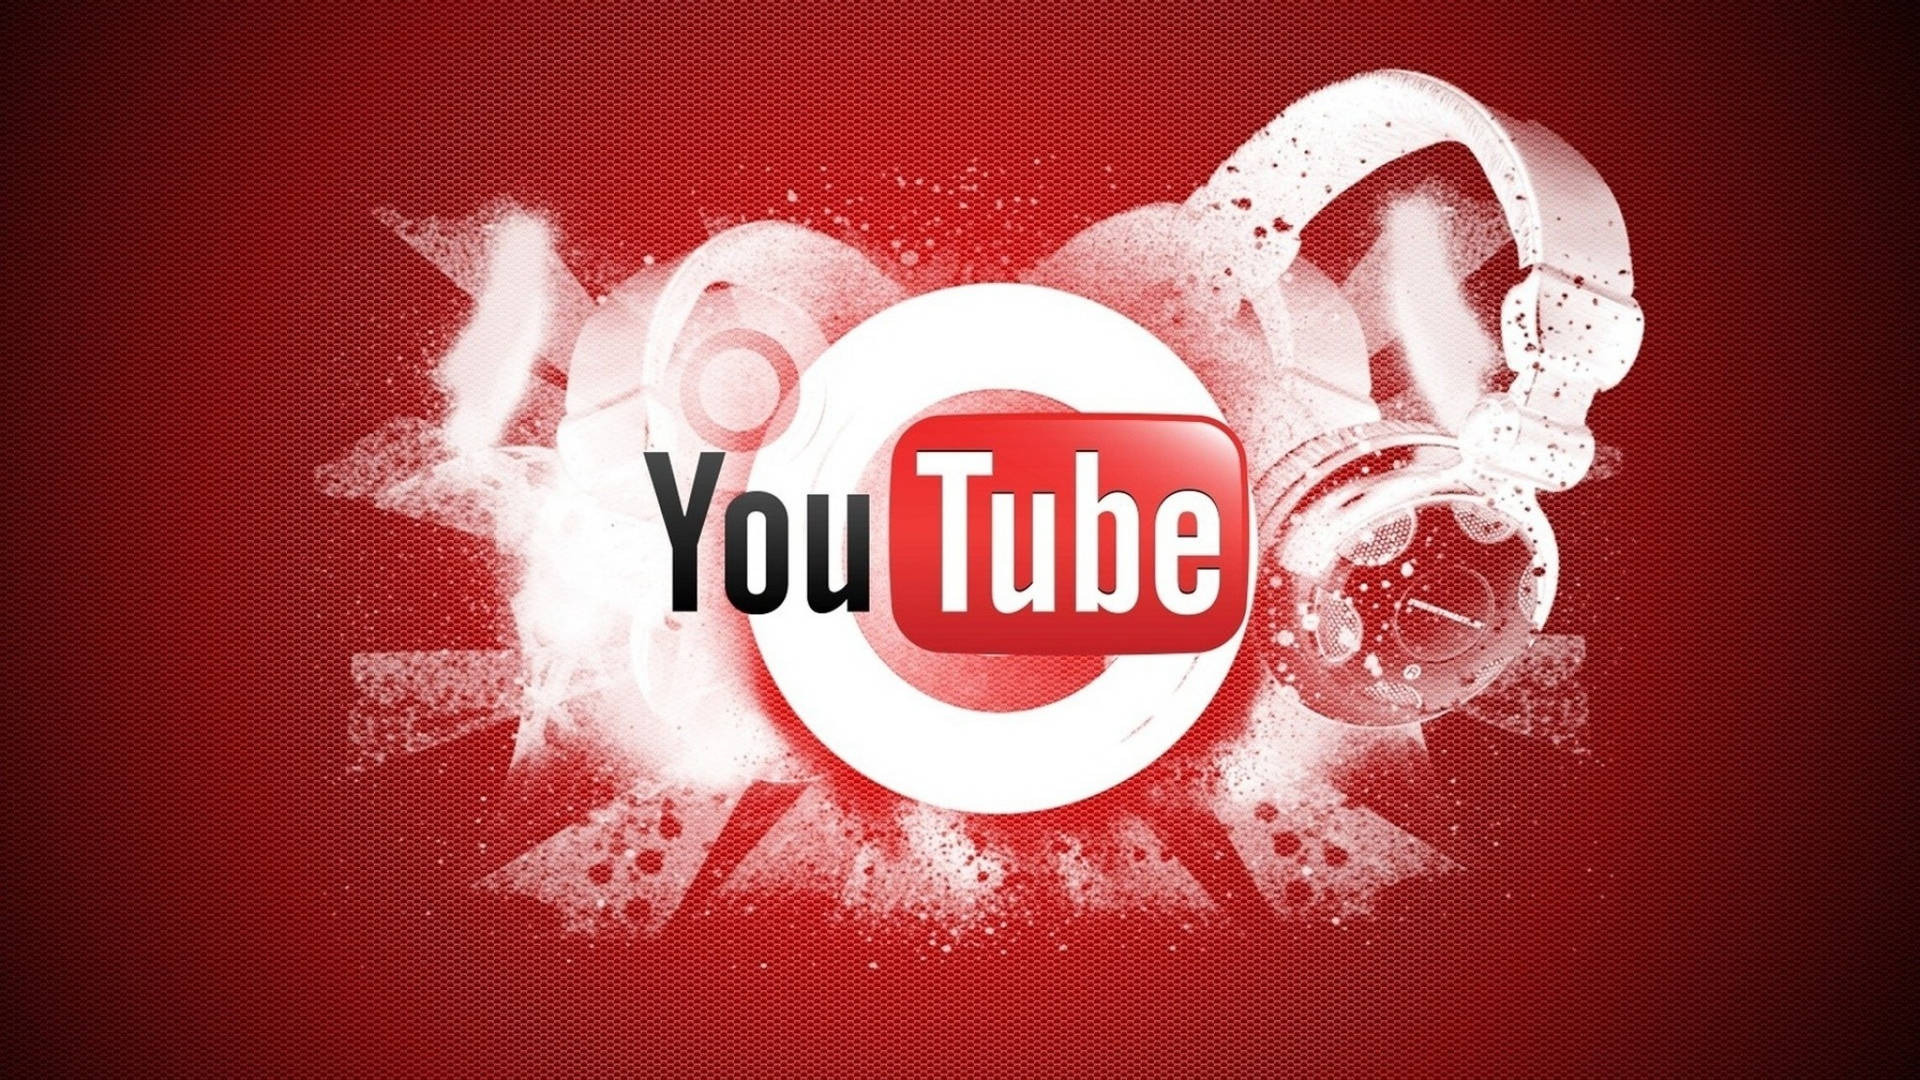 Youtube Logo With White Headphones